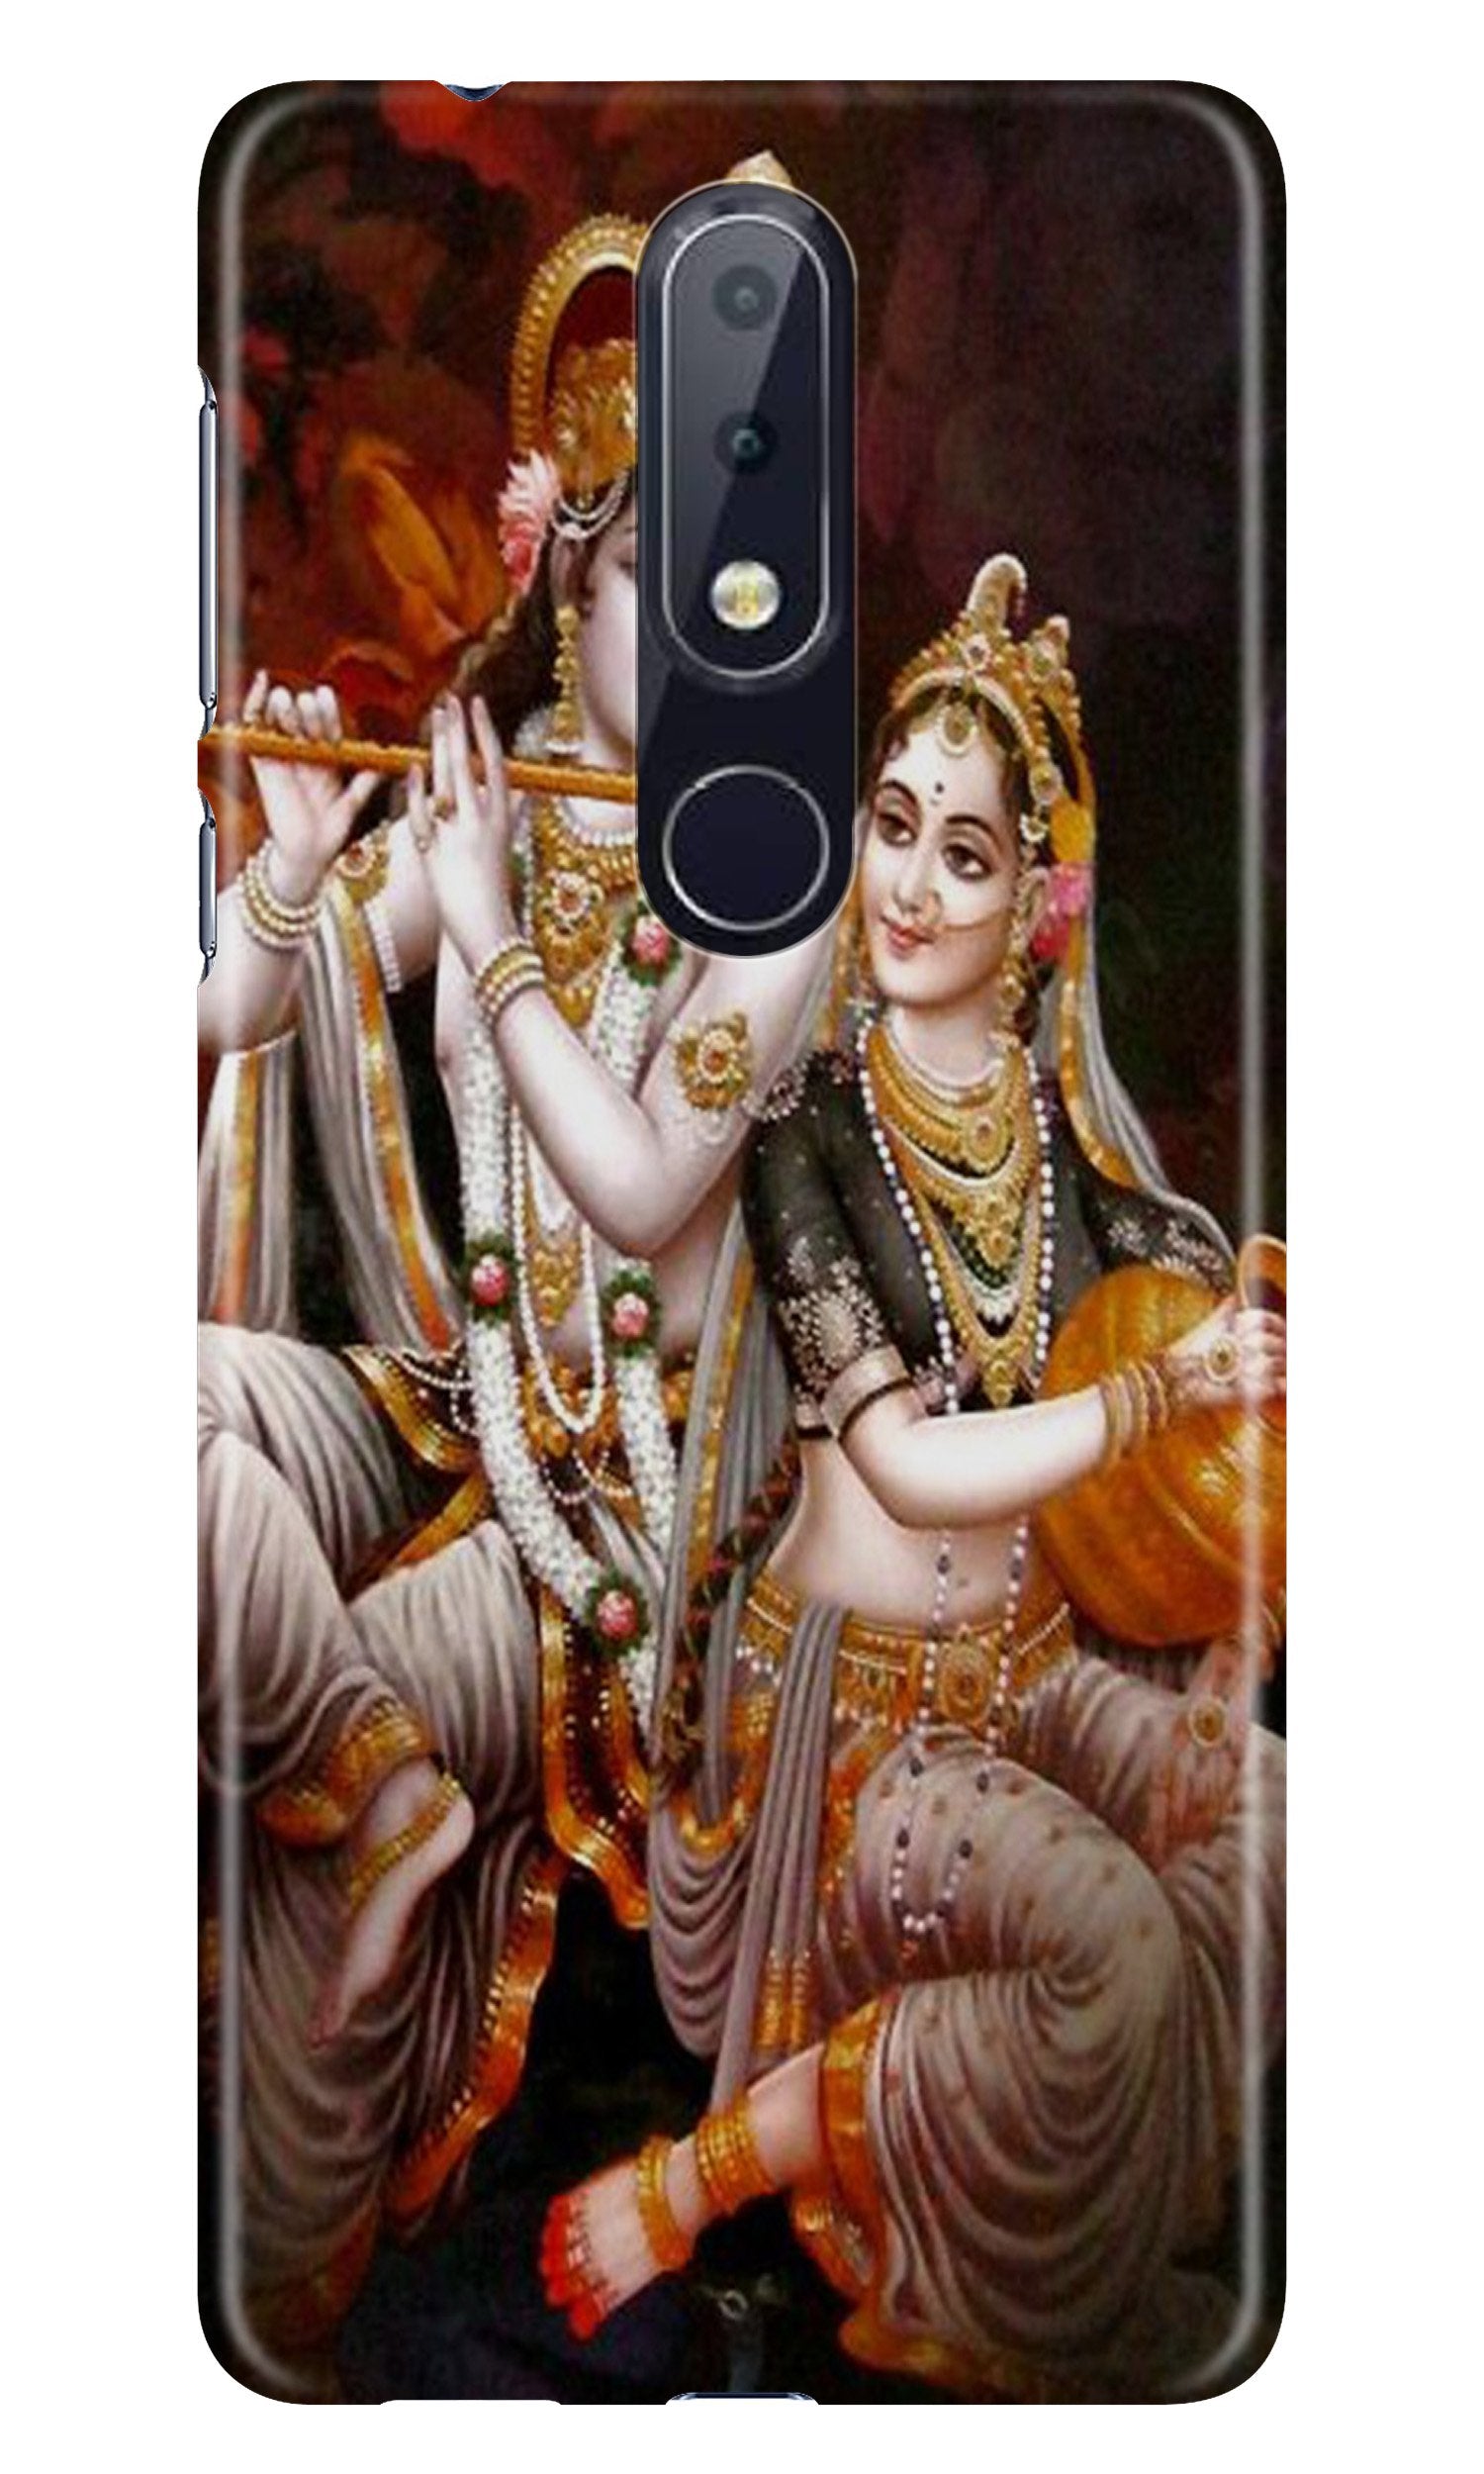 Radha Krishna Case for Nokia 7.1 (Design No. 292)